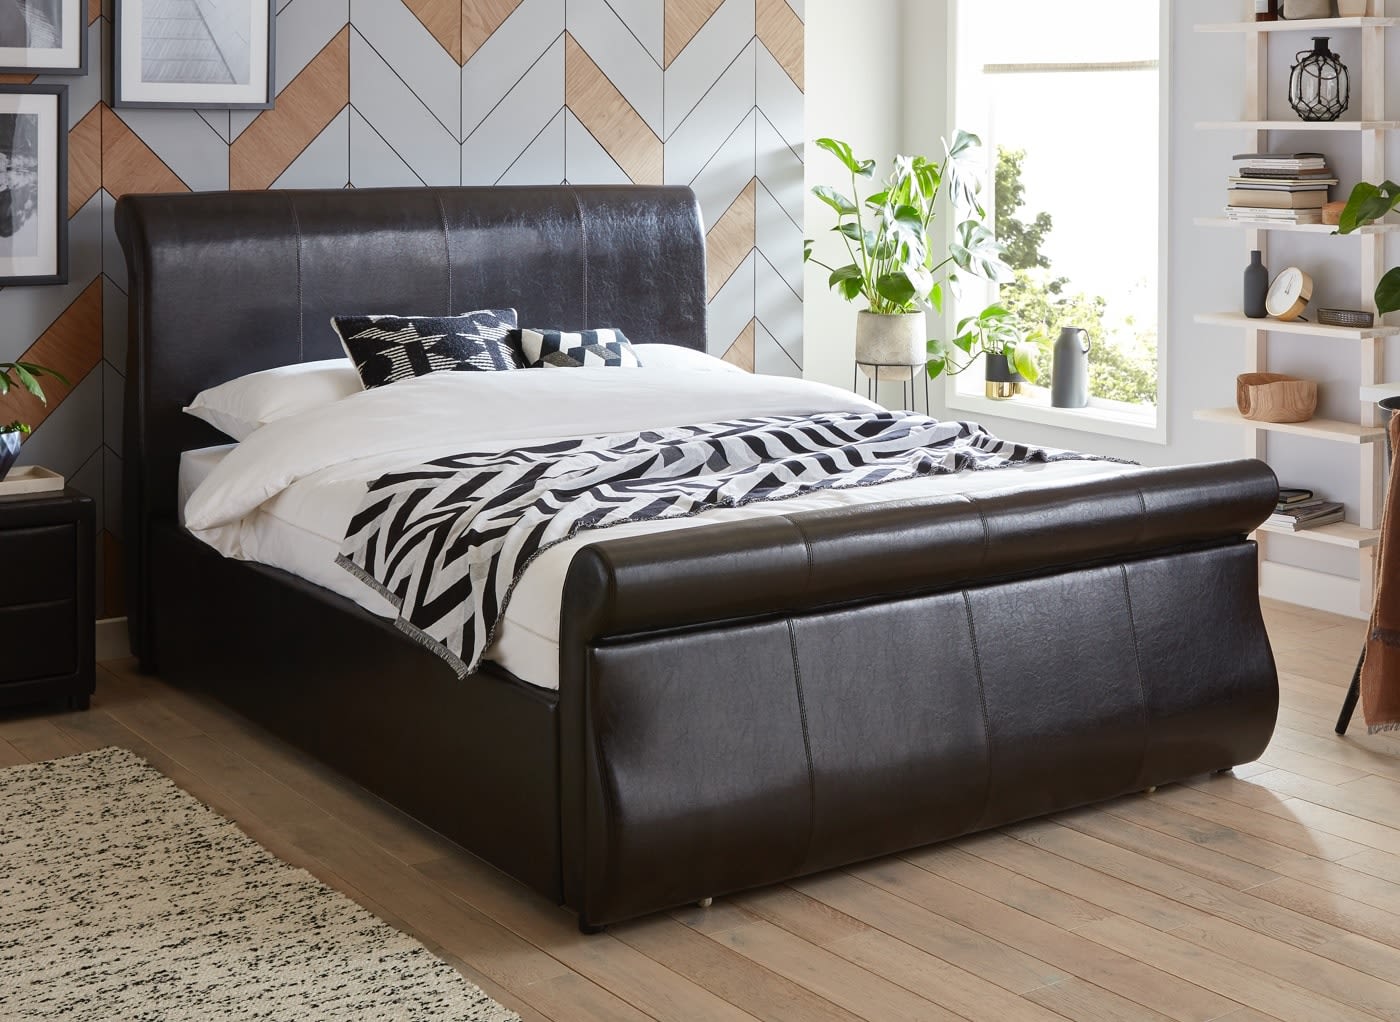 super king bed and mattress deals ireland